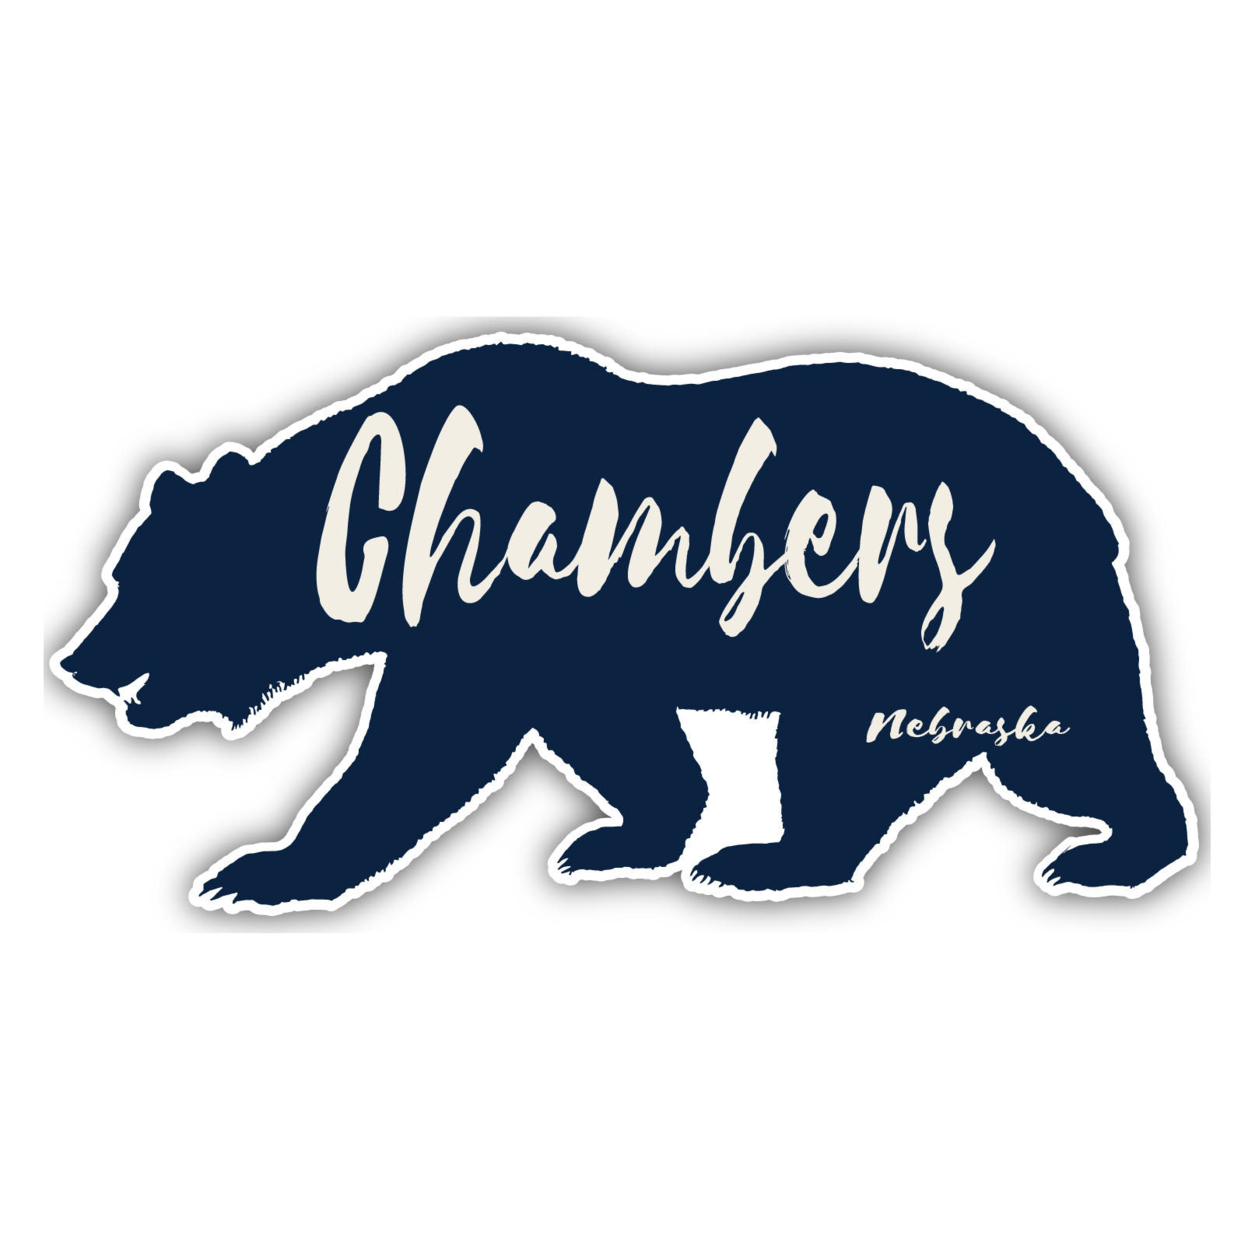 Chambers Nebraska Souvenir Decorative Stickers (Choose Theme And Size) - Single Unit, 6-Inch, Bear